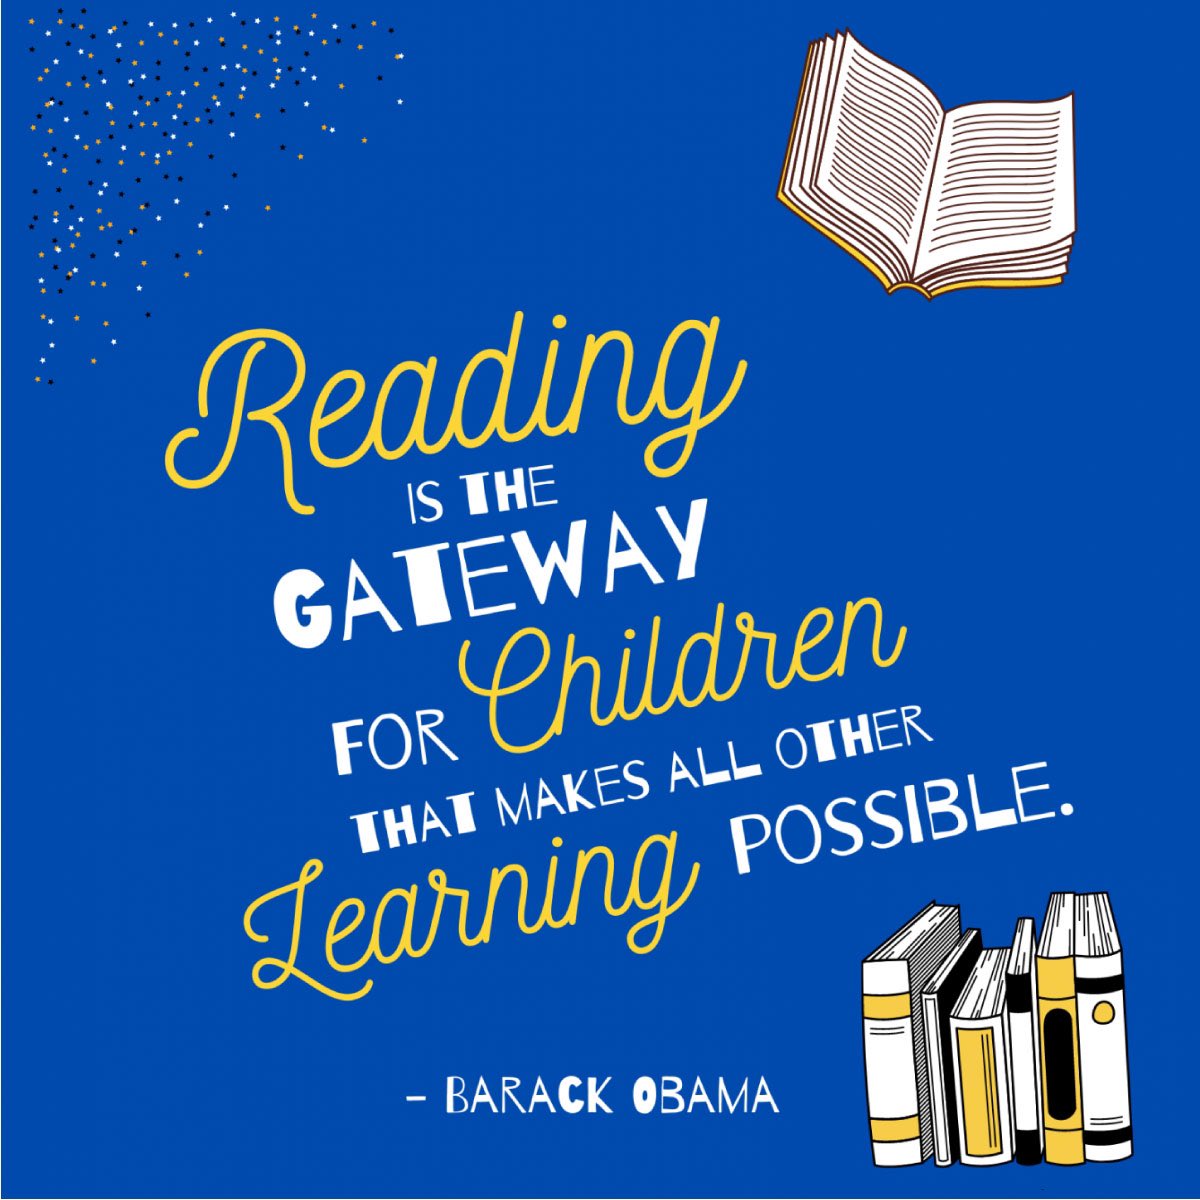 ❤️

#toebytoe #readingquotes #read #learn #teach #dyslexiacommunity